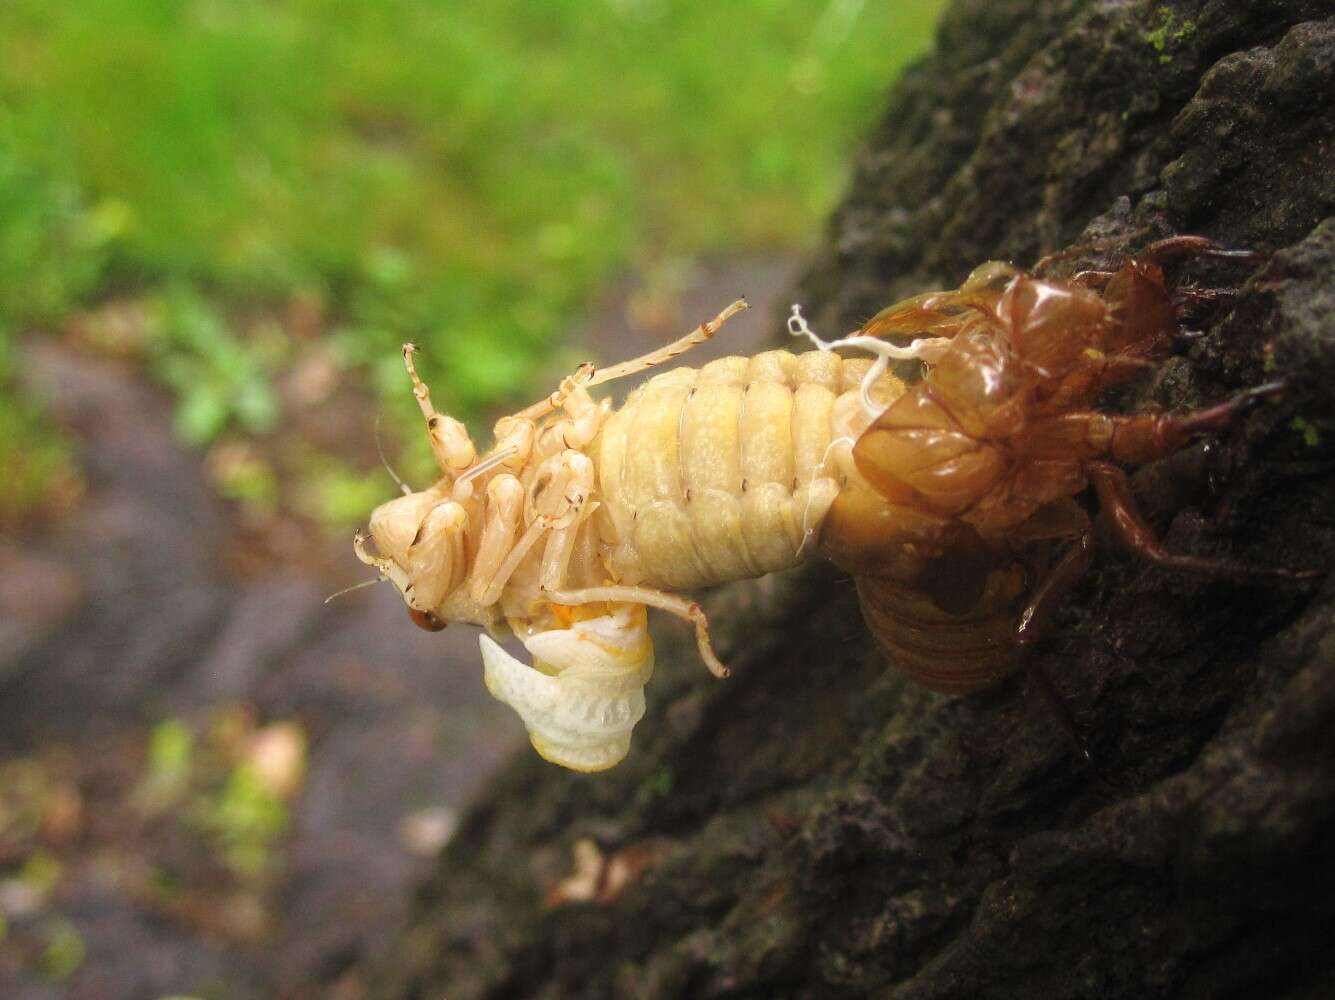 Image of Decim Periodical Cicada